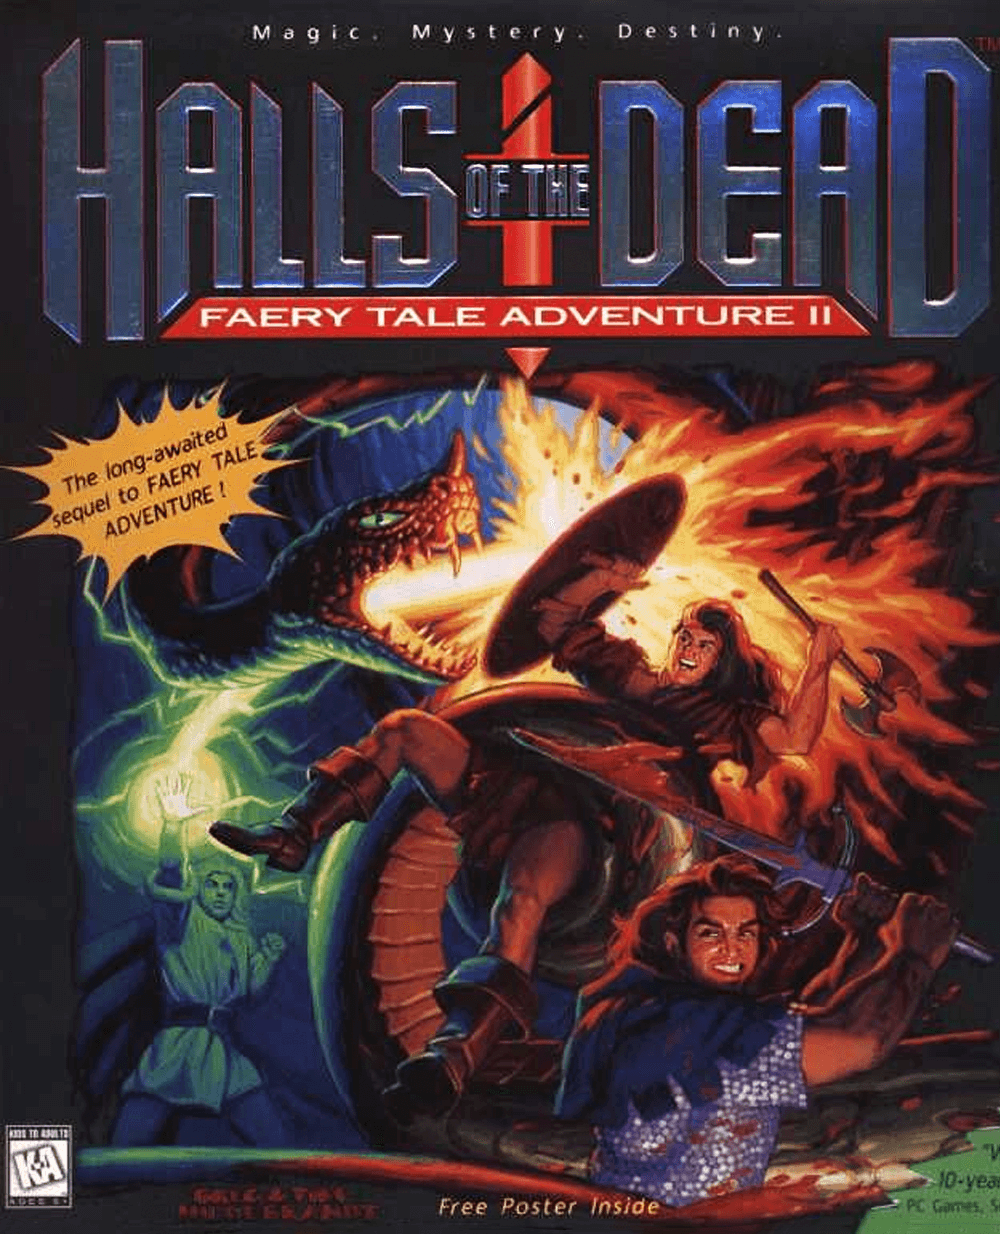 halls-of-the-dead-faery-tale-adventure-ii